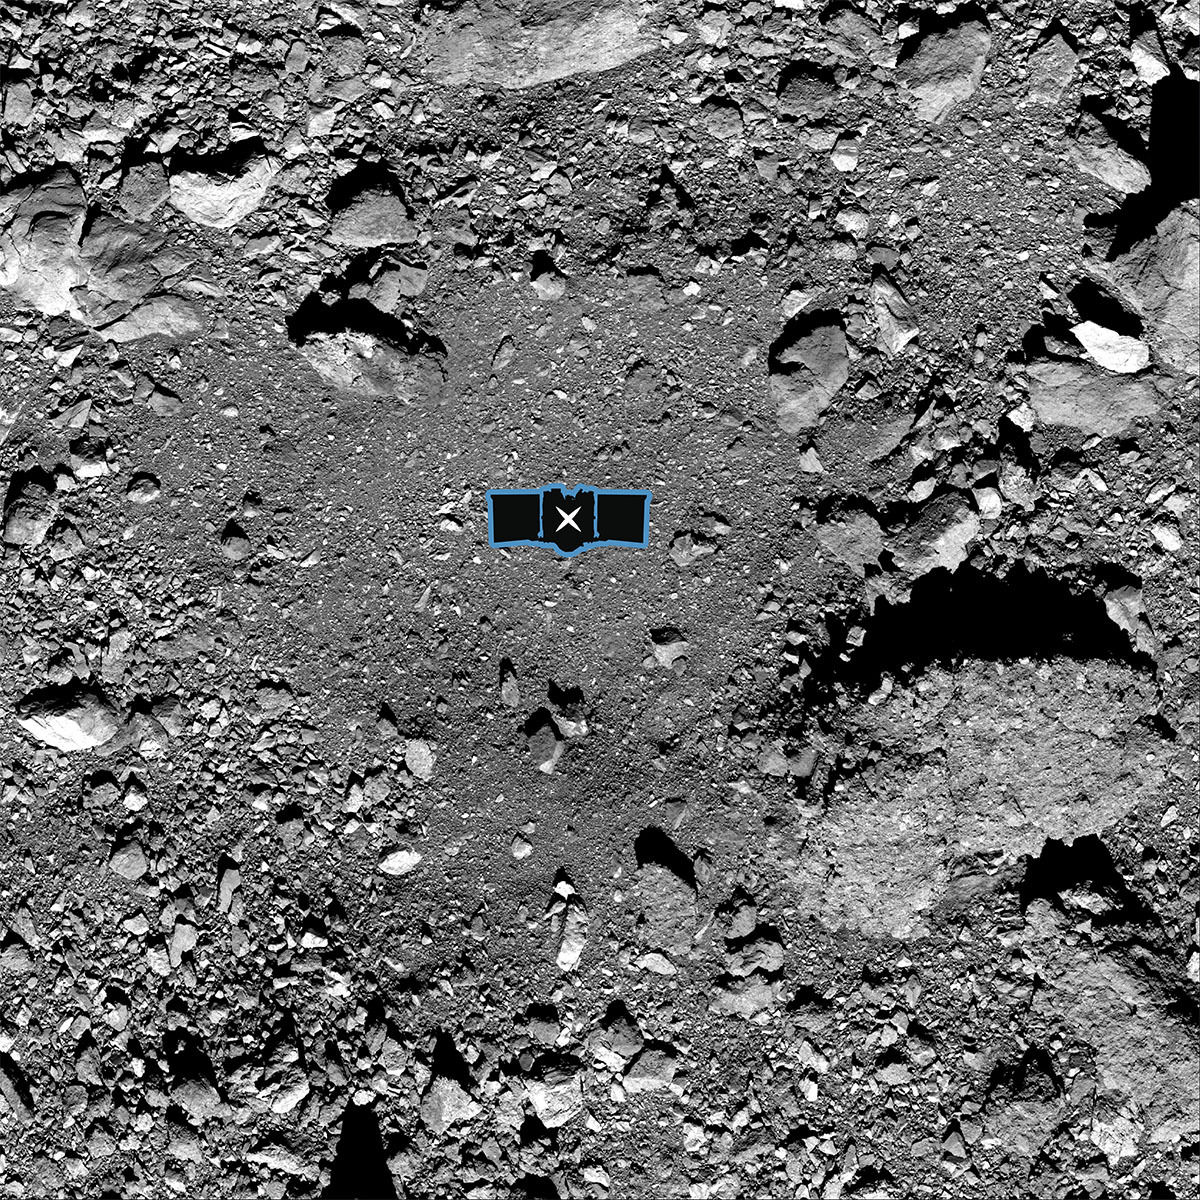 OSIRIS-REx sample site diagram over an image of asteroid Bennu's surface